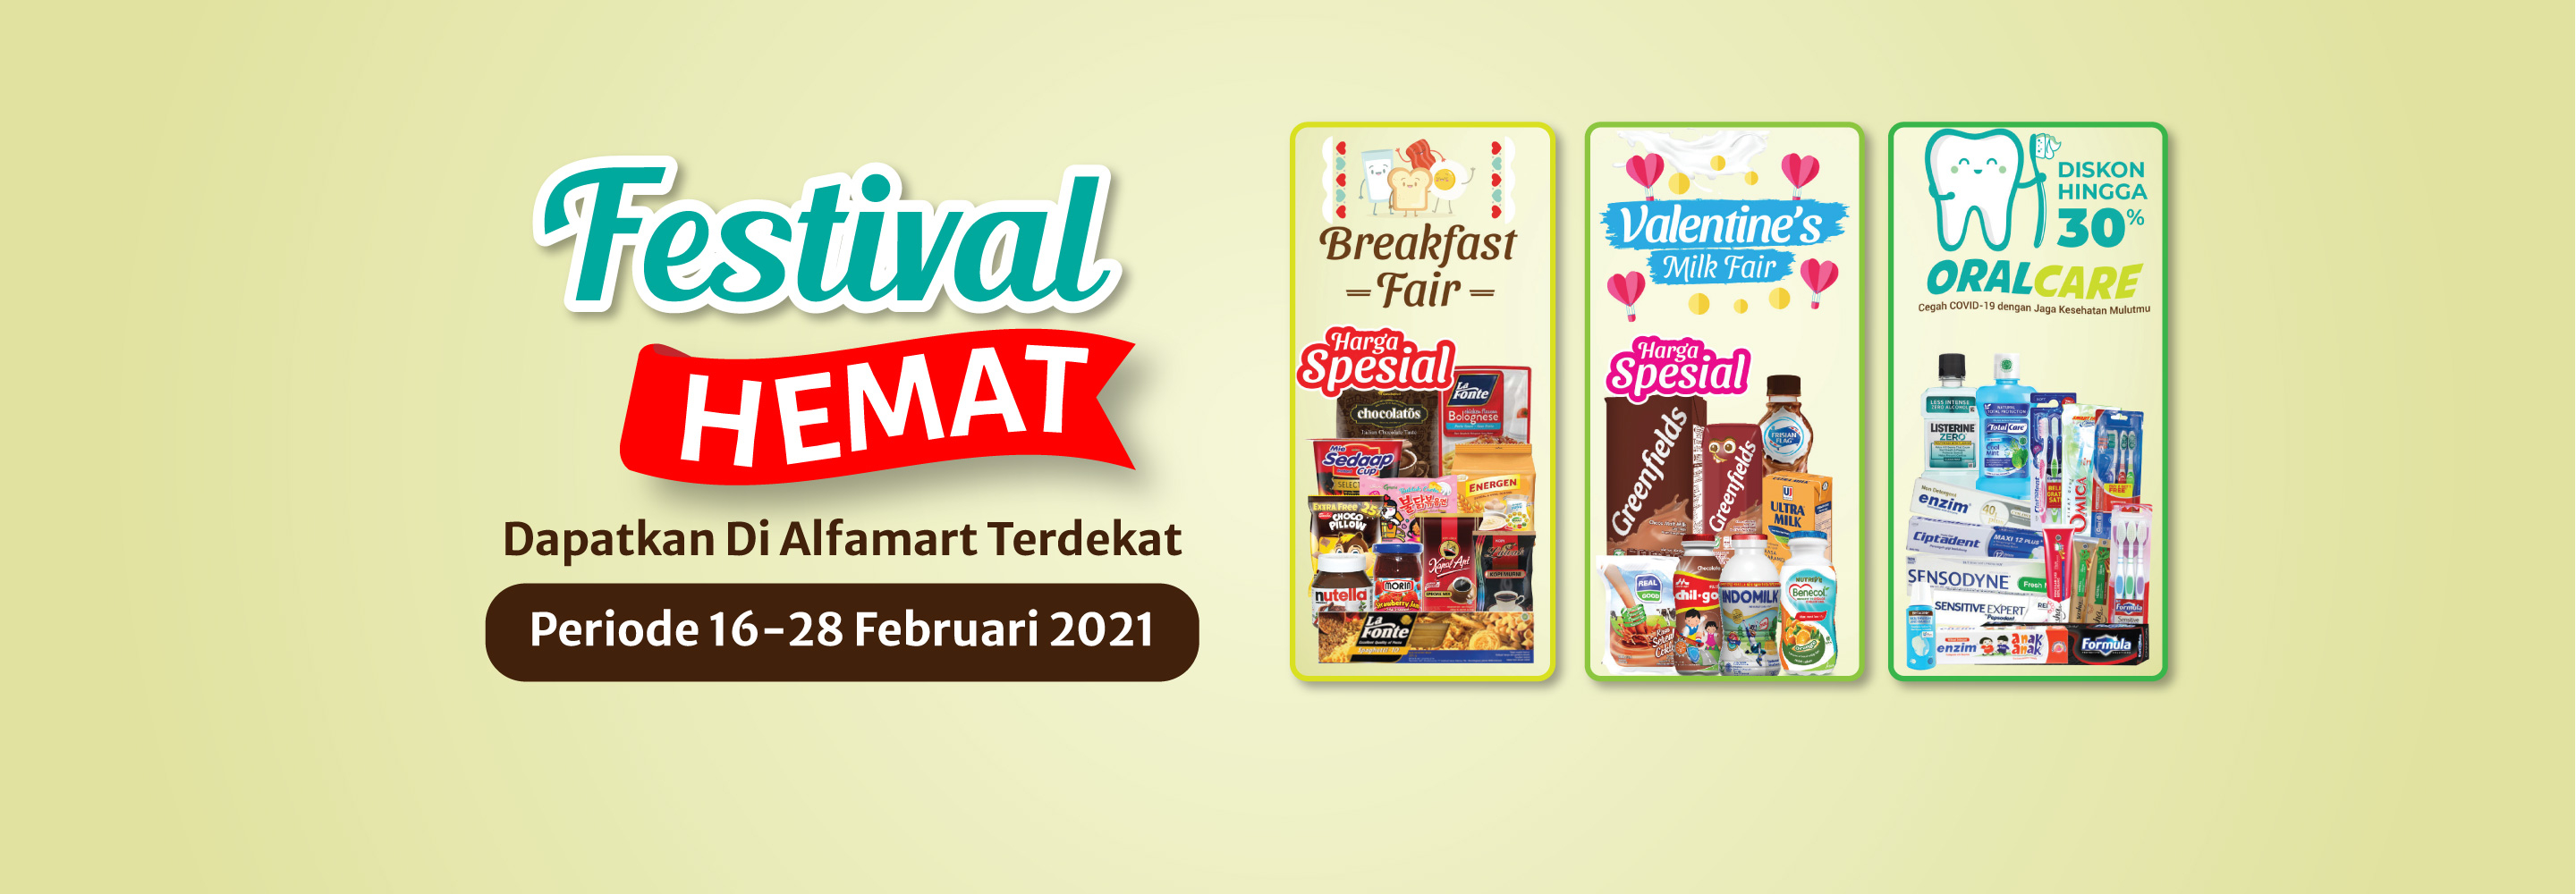 Promo Festival Hemat Alfamart Alfamart